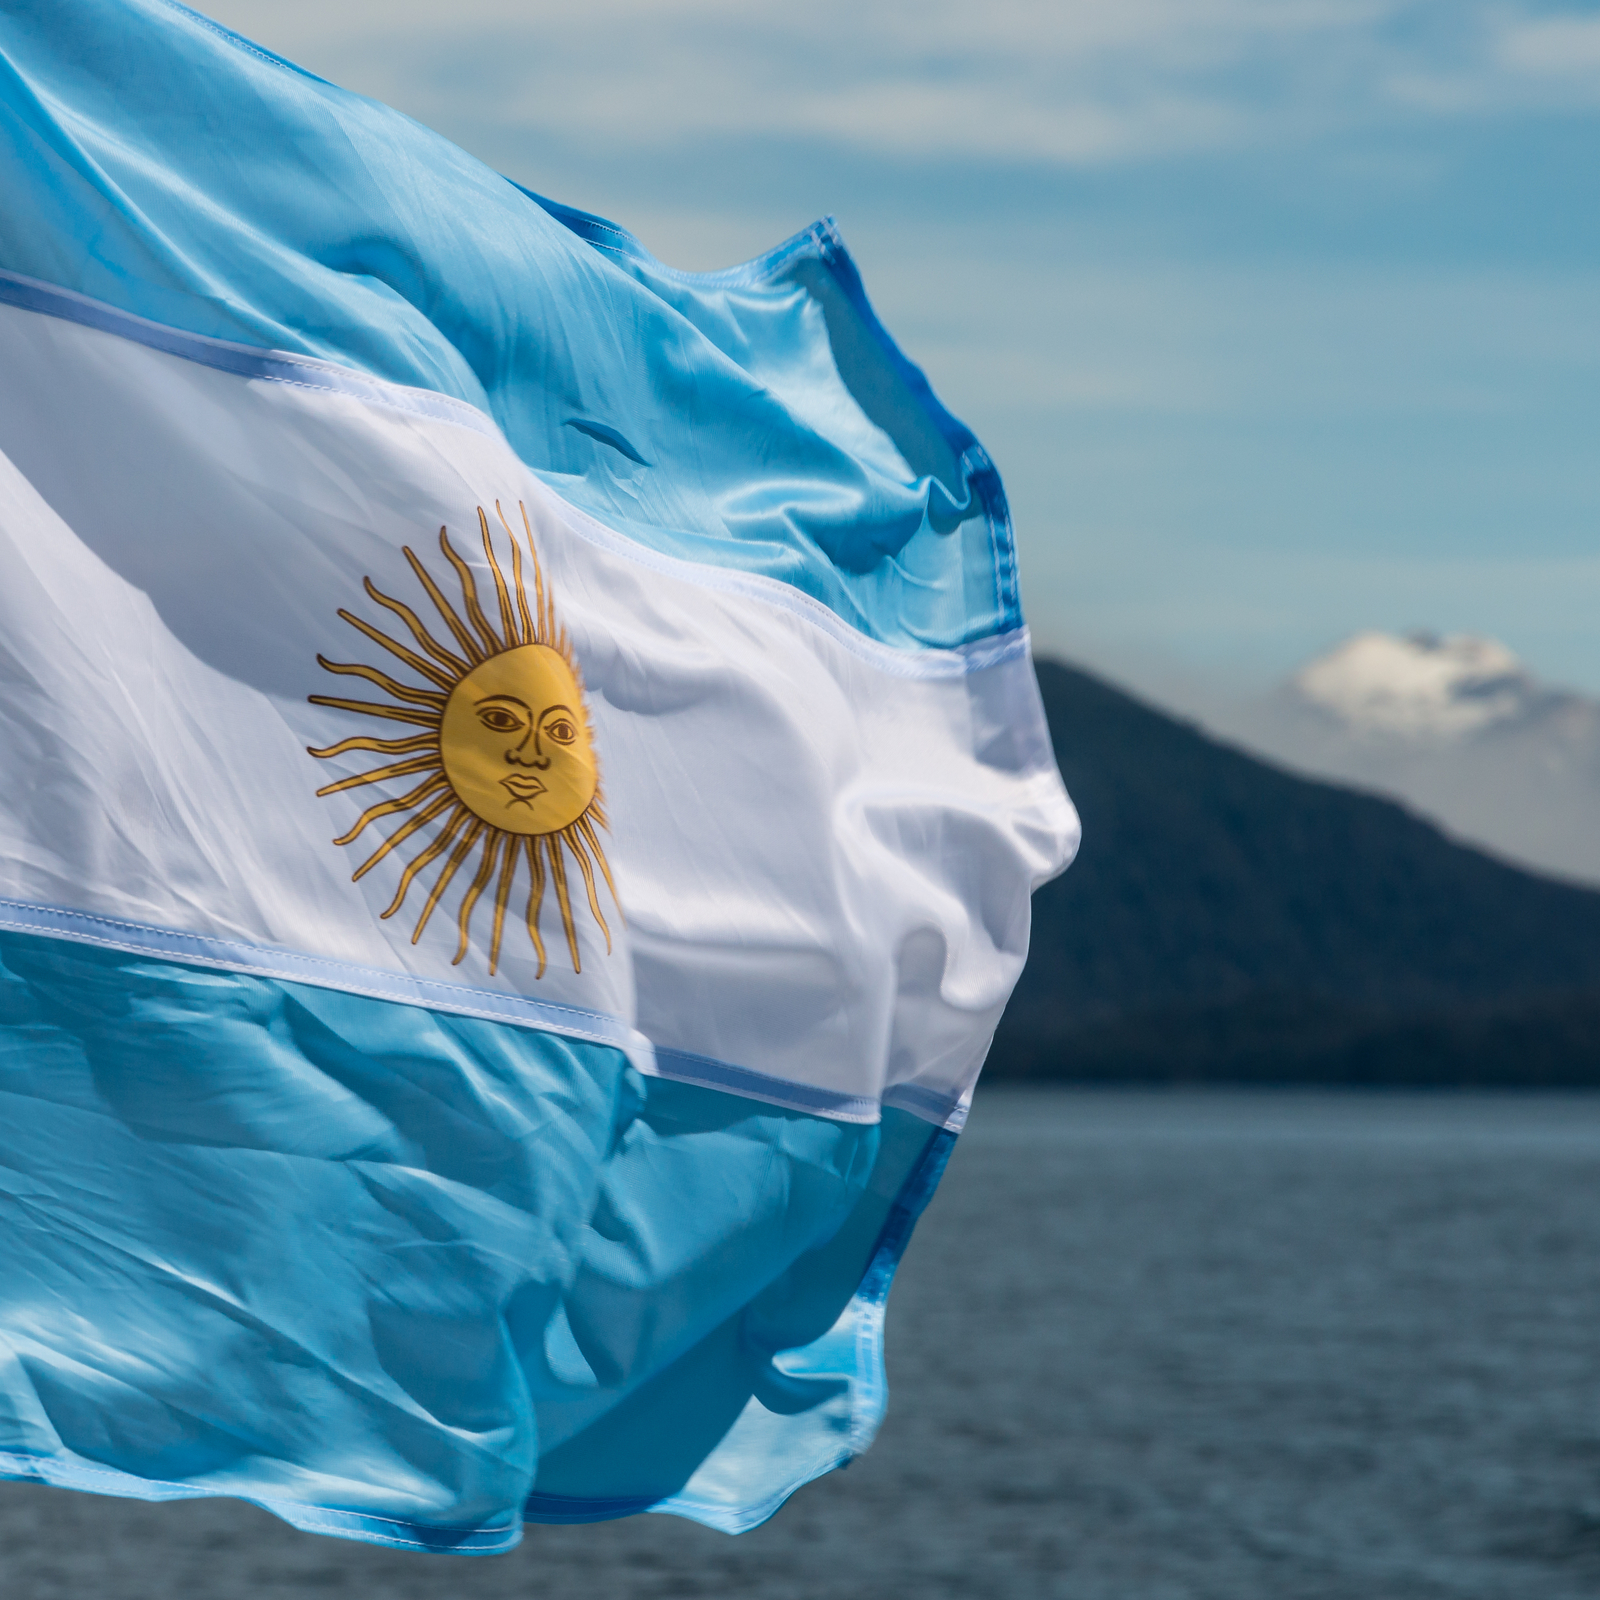 Tim Draper Advises Argentina's President to Invest in Bitcoin